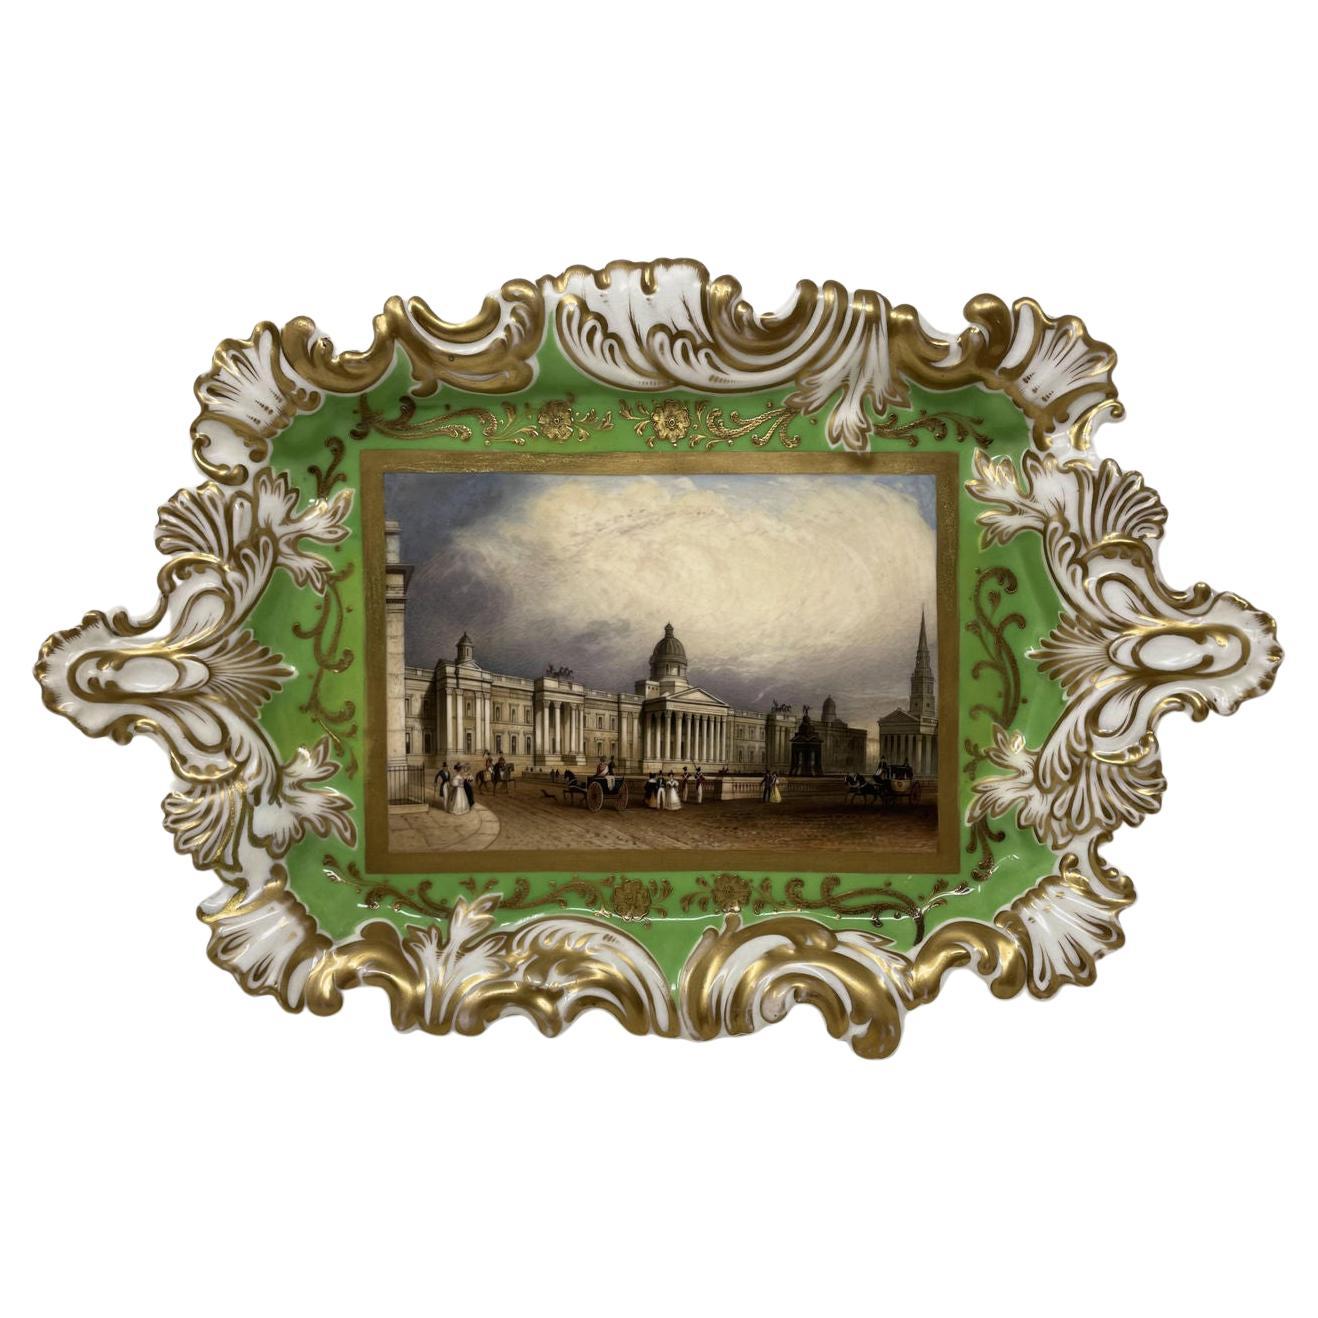 Antique Regency Chamberlains Worcester Plate Centerpiece National Gallery London